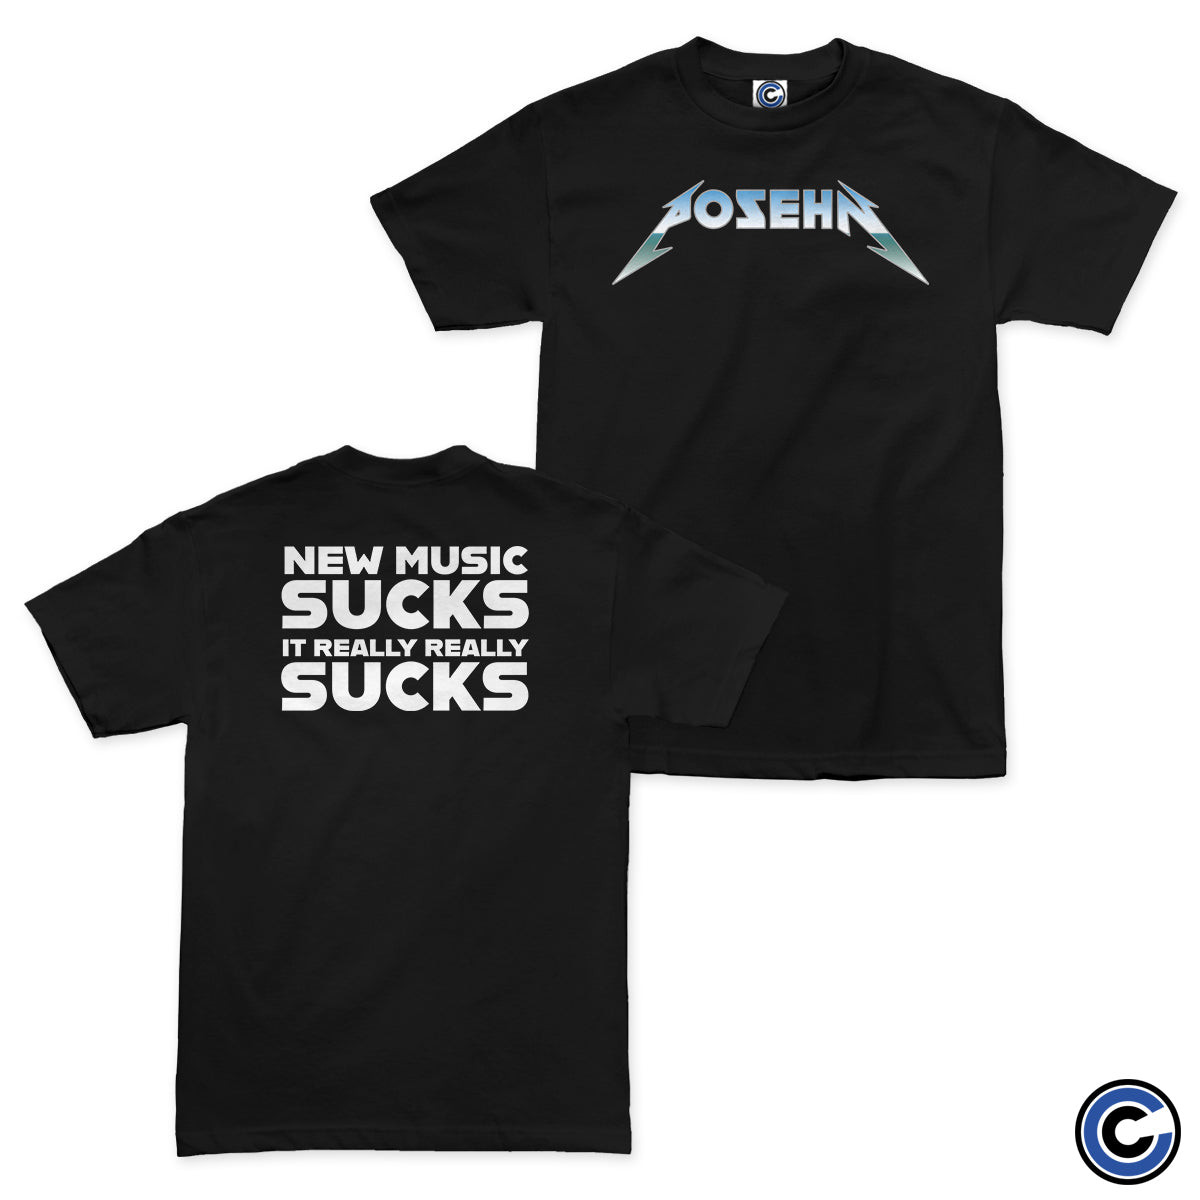 Brian Posehn "New Music Sucks" Shirt